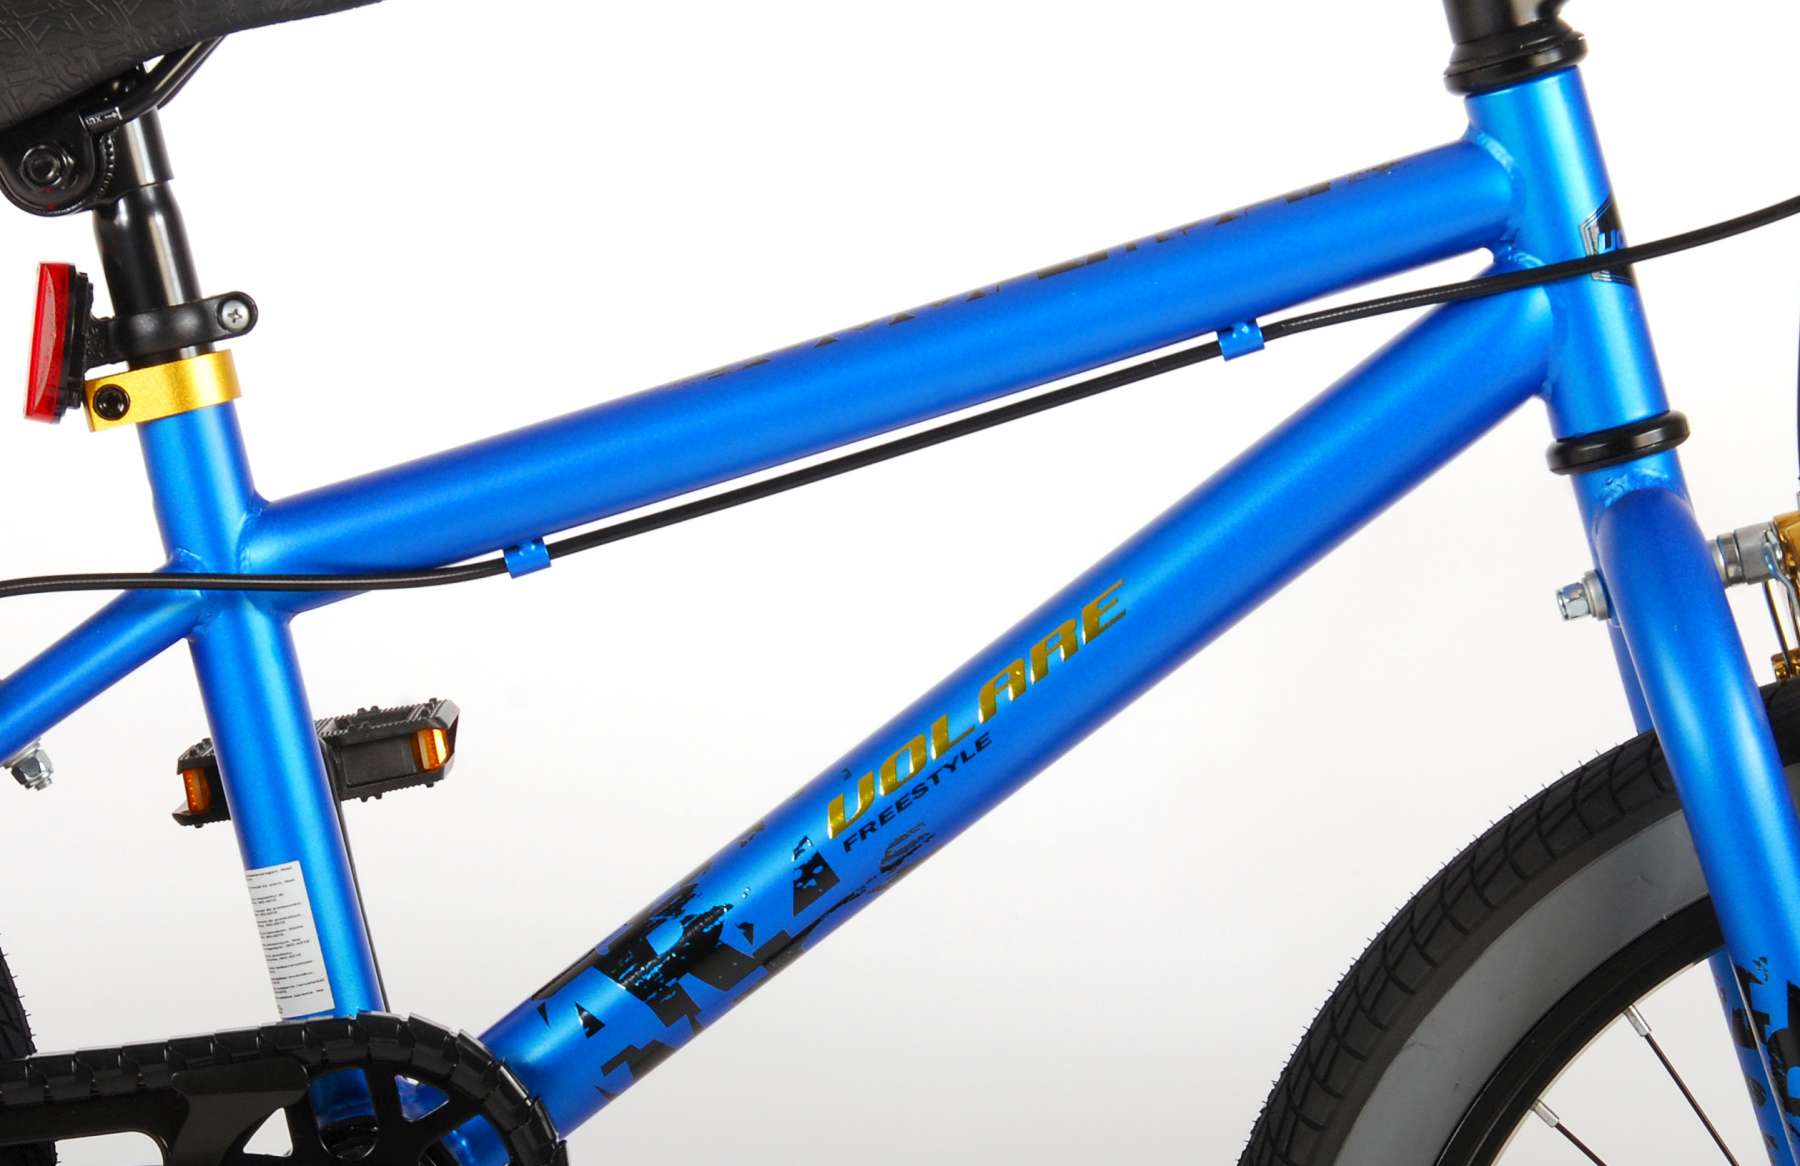 Kinderfahrrad Cool Rider Fahrrad für Jungen 18 Zoll Kinderrad in Blau